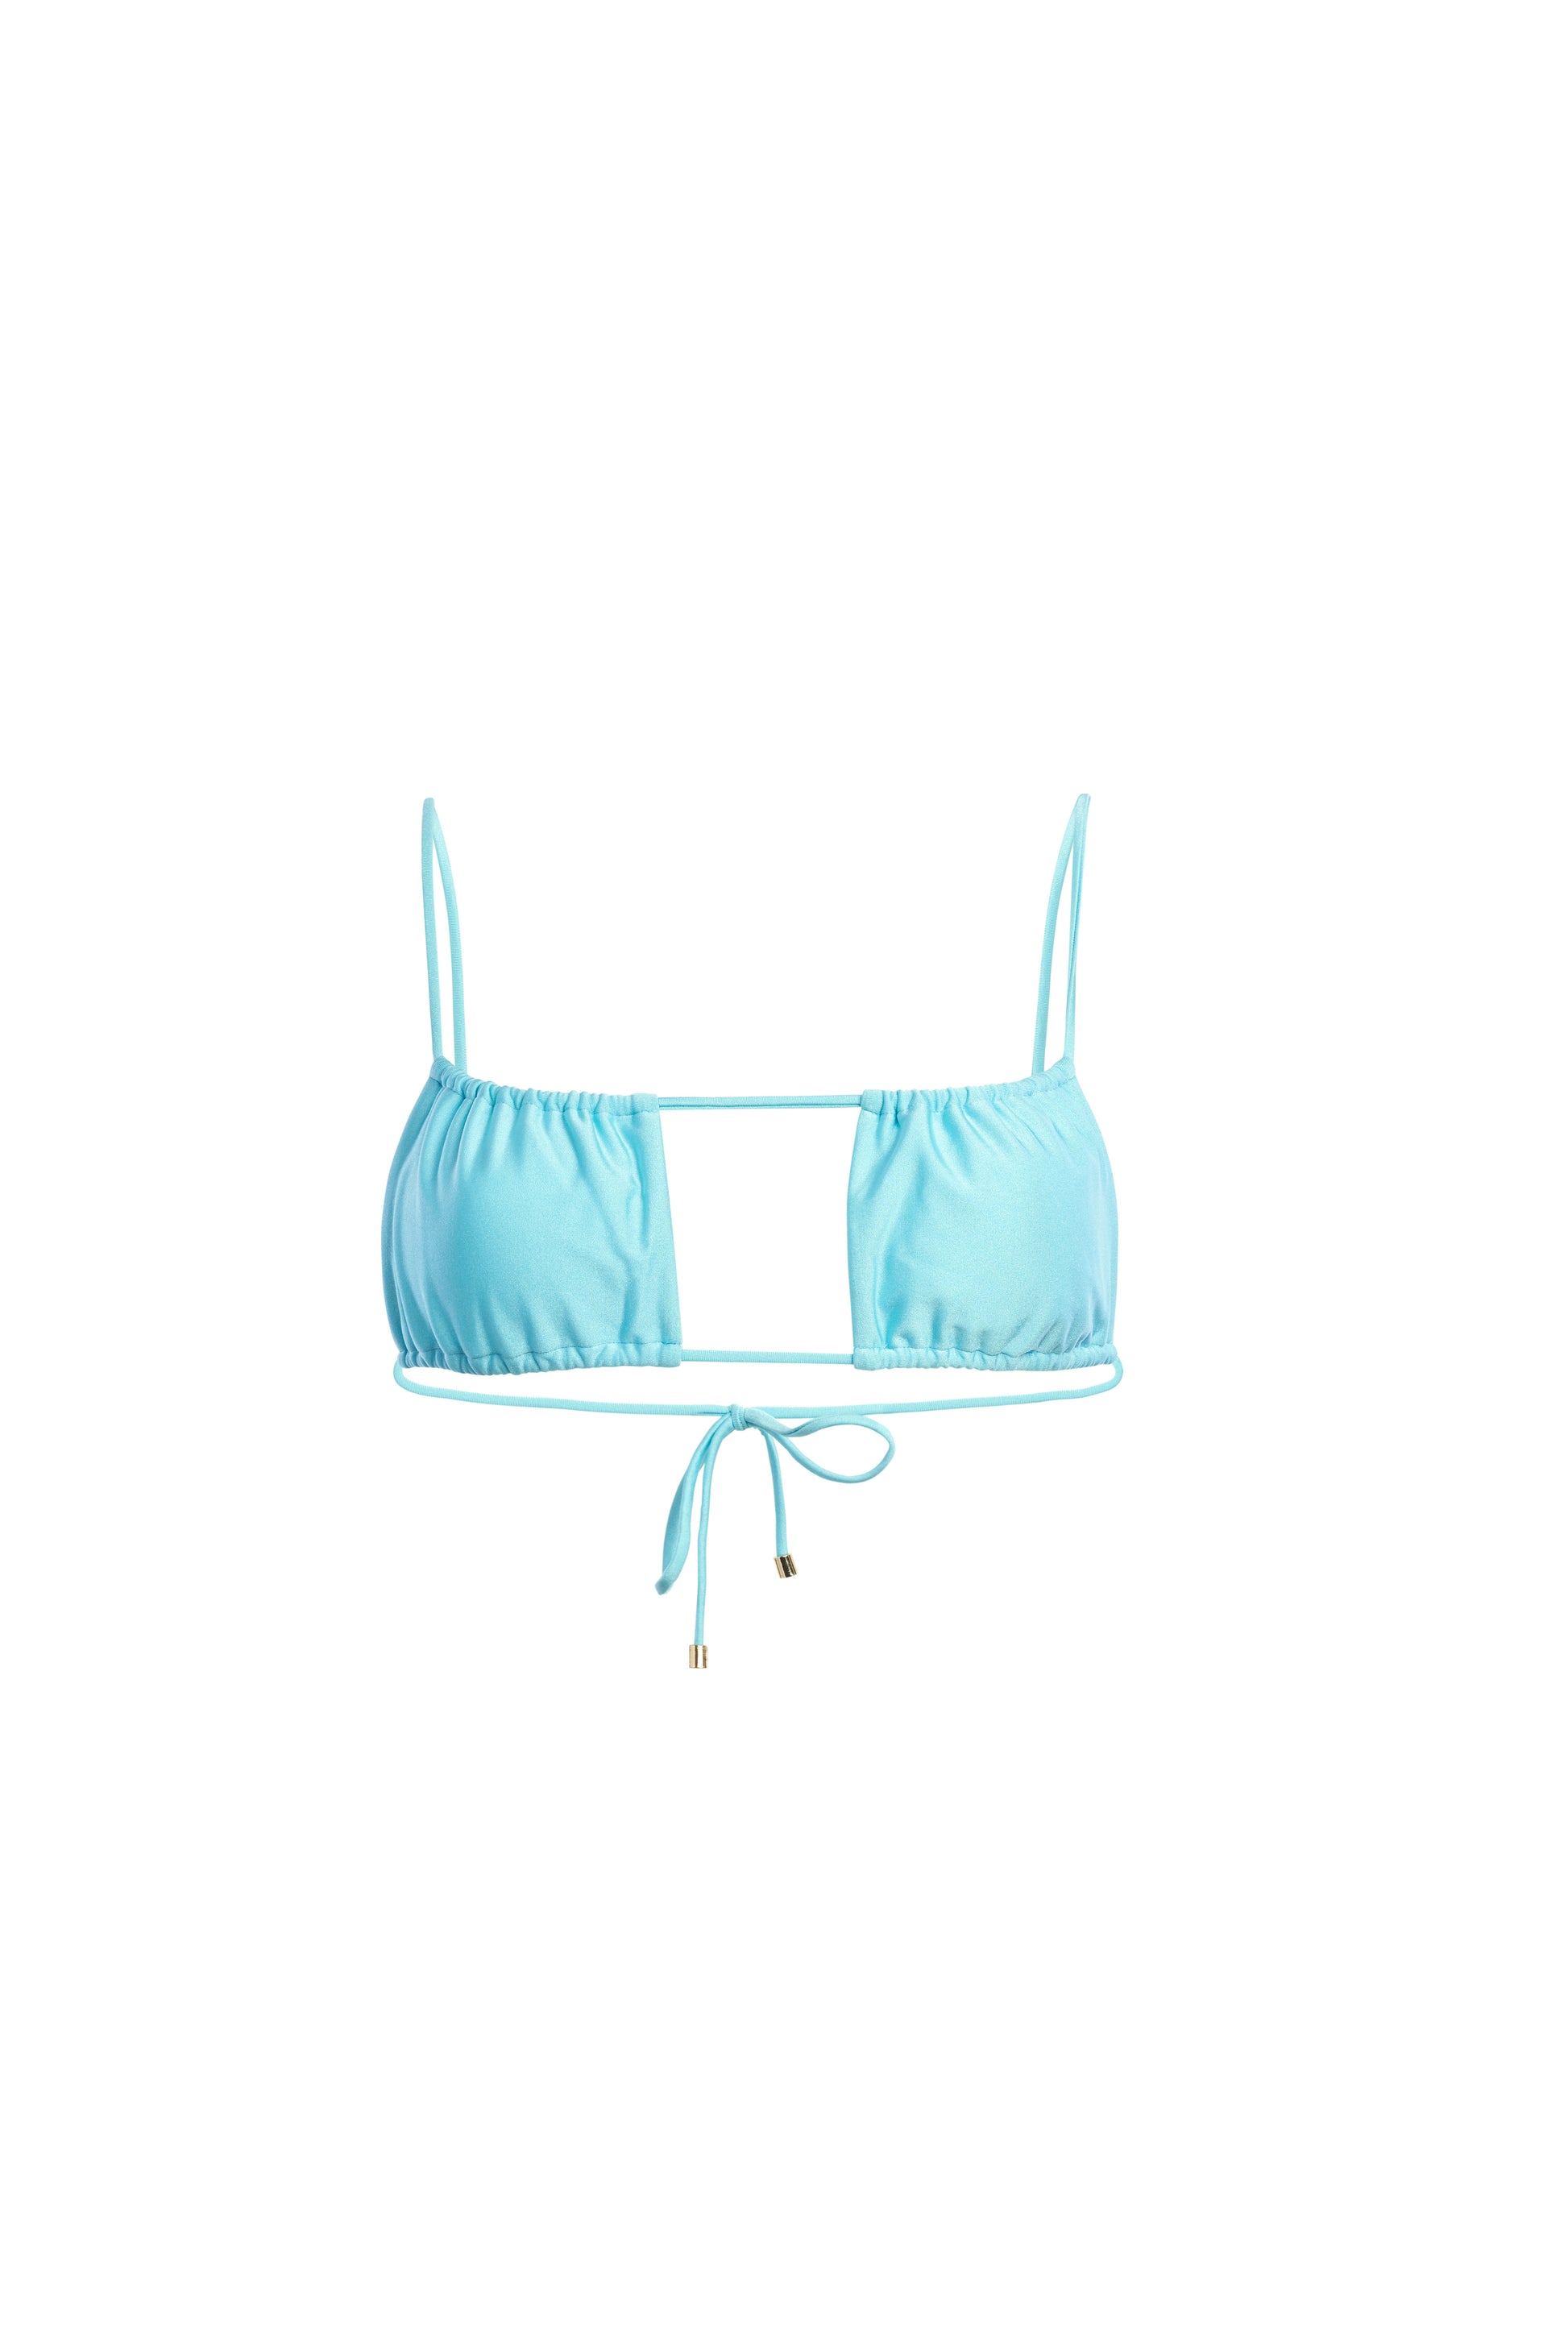 Vicca bikini. An adjustable and blue bikini with golden details.